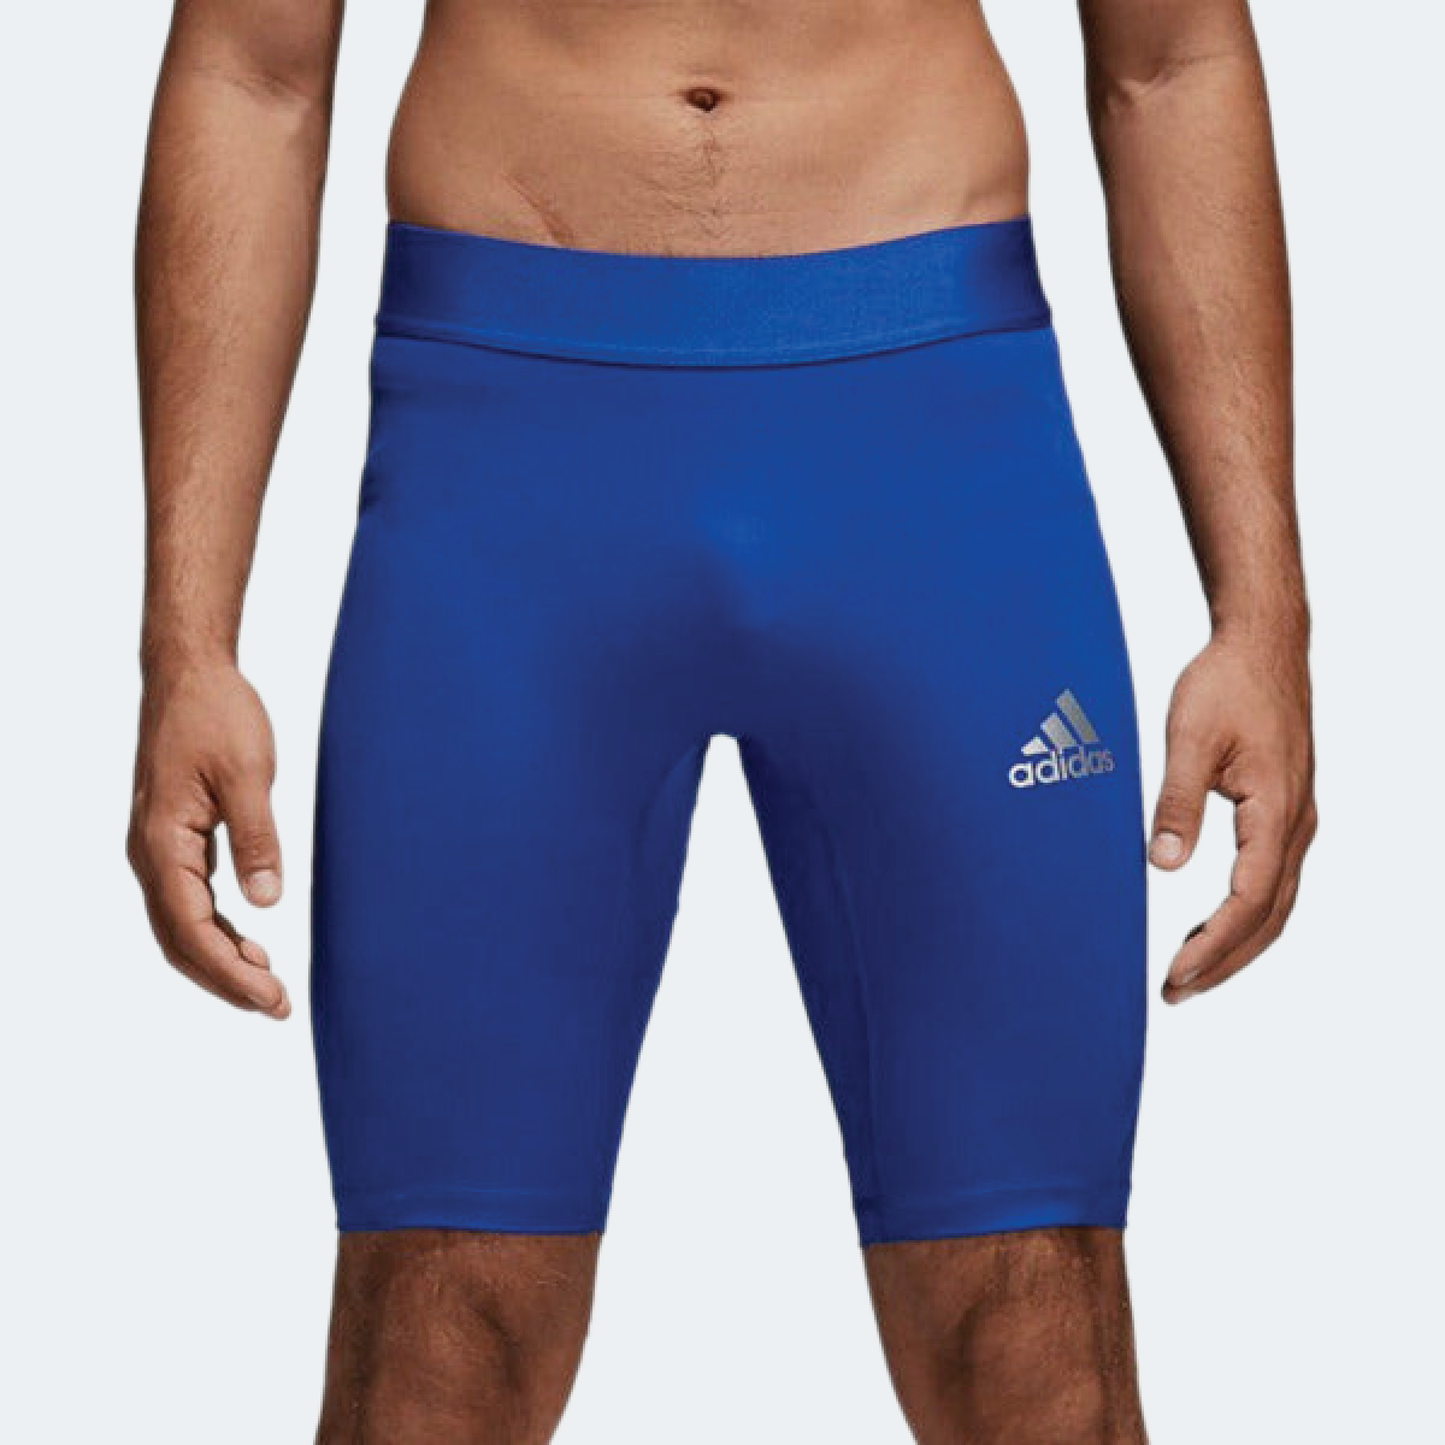 adidas TECHFIT Short Tights | Team Royal Blue | Men's